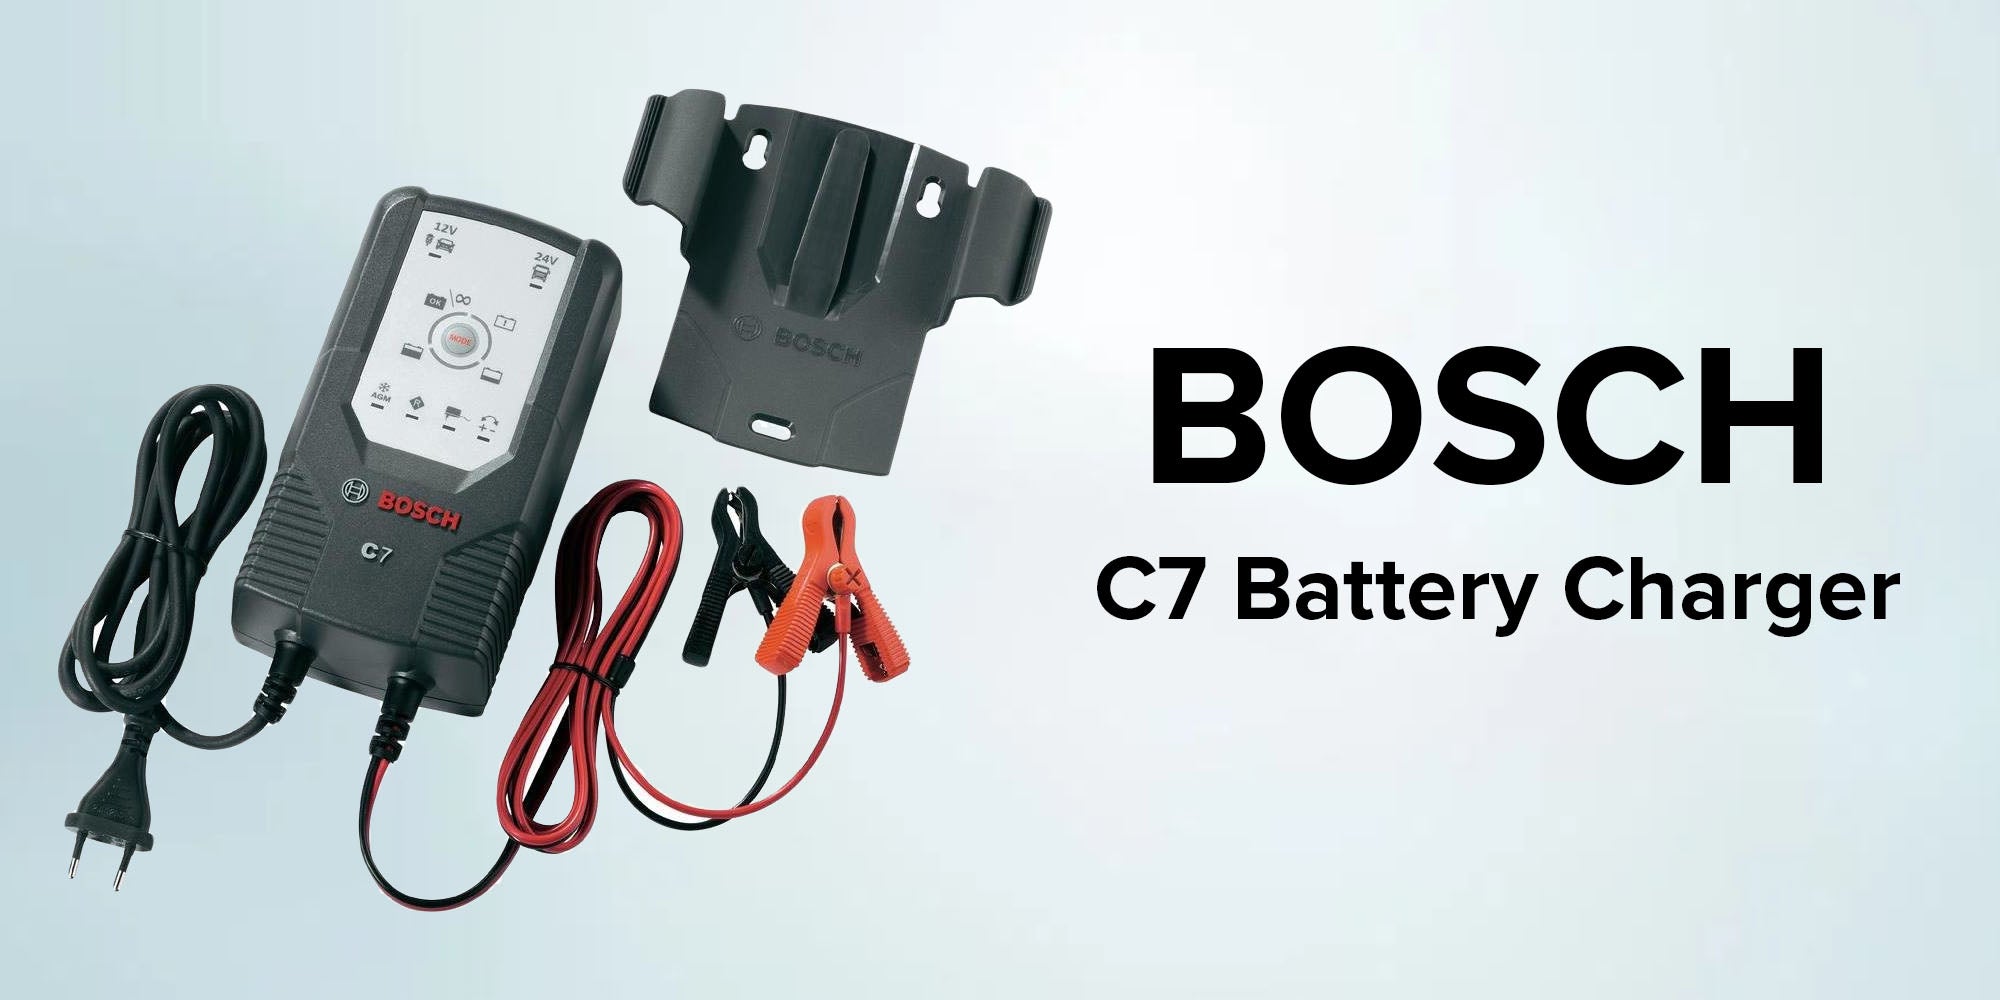 BOSCH C7 Battery Charger 12V/24V UAE